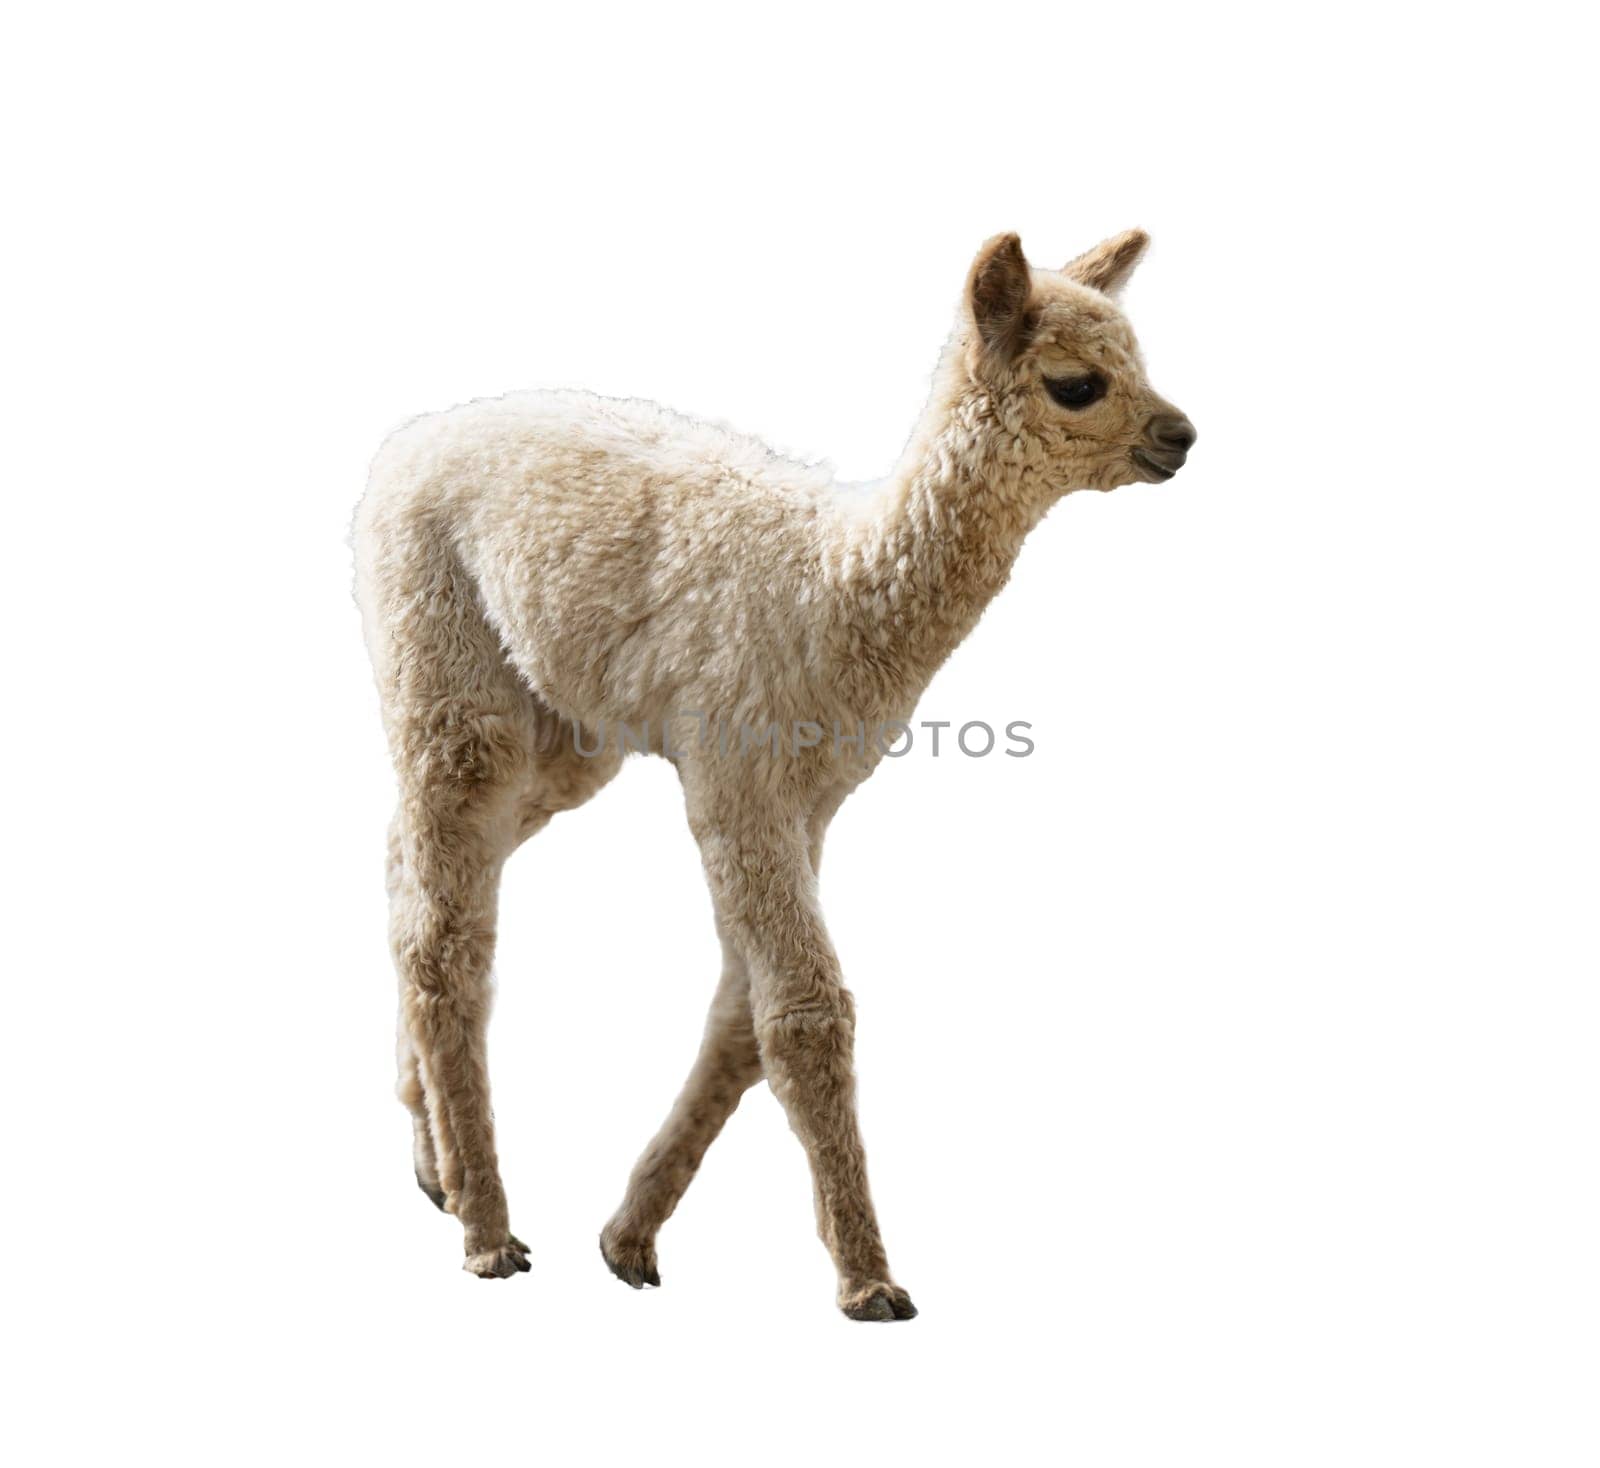 A Pacos Lama, Alpaca  by sergiodv